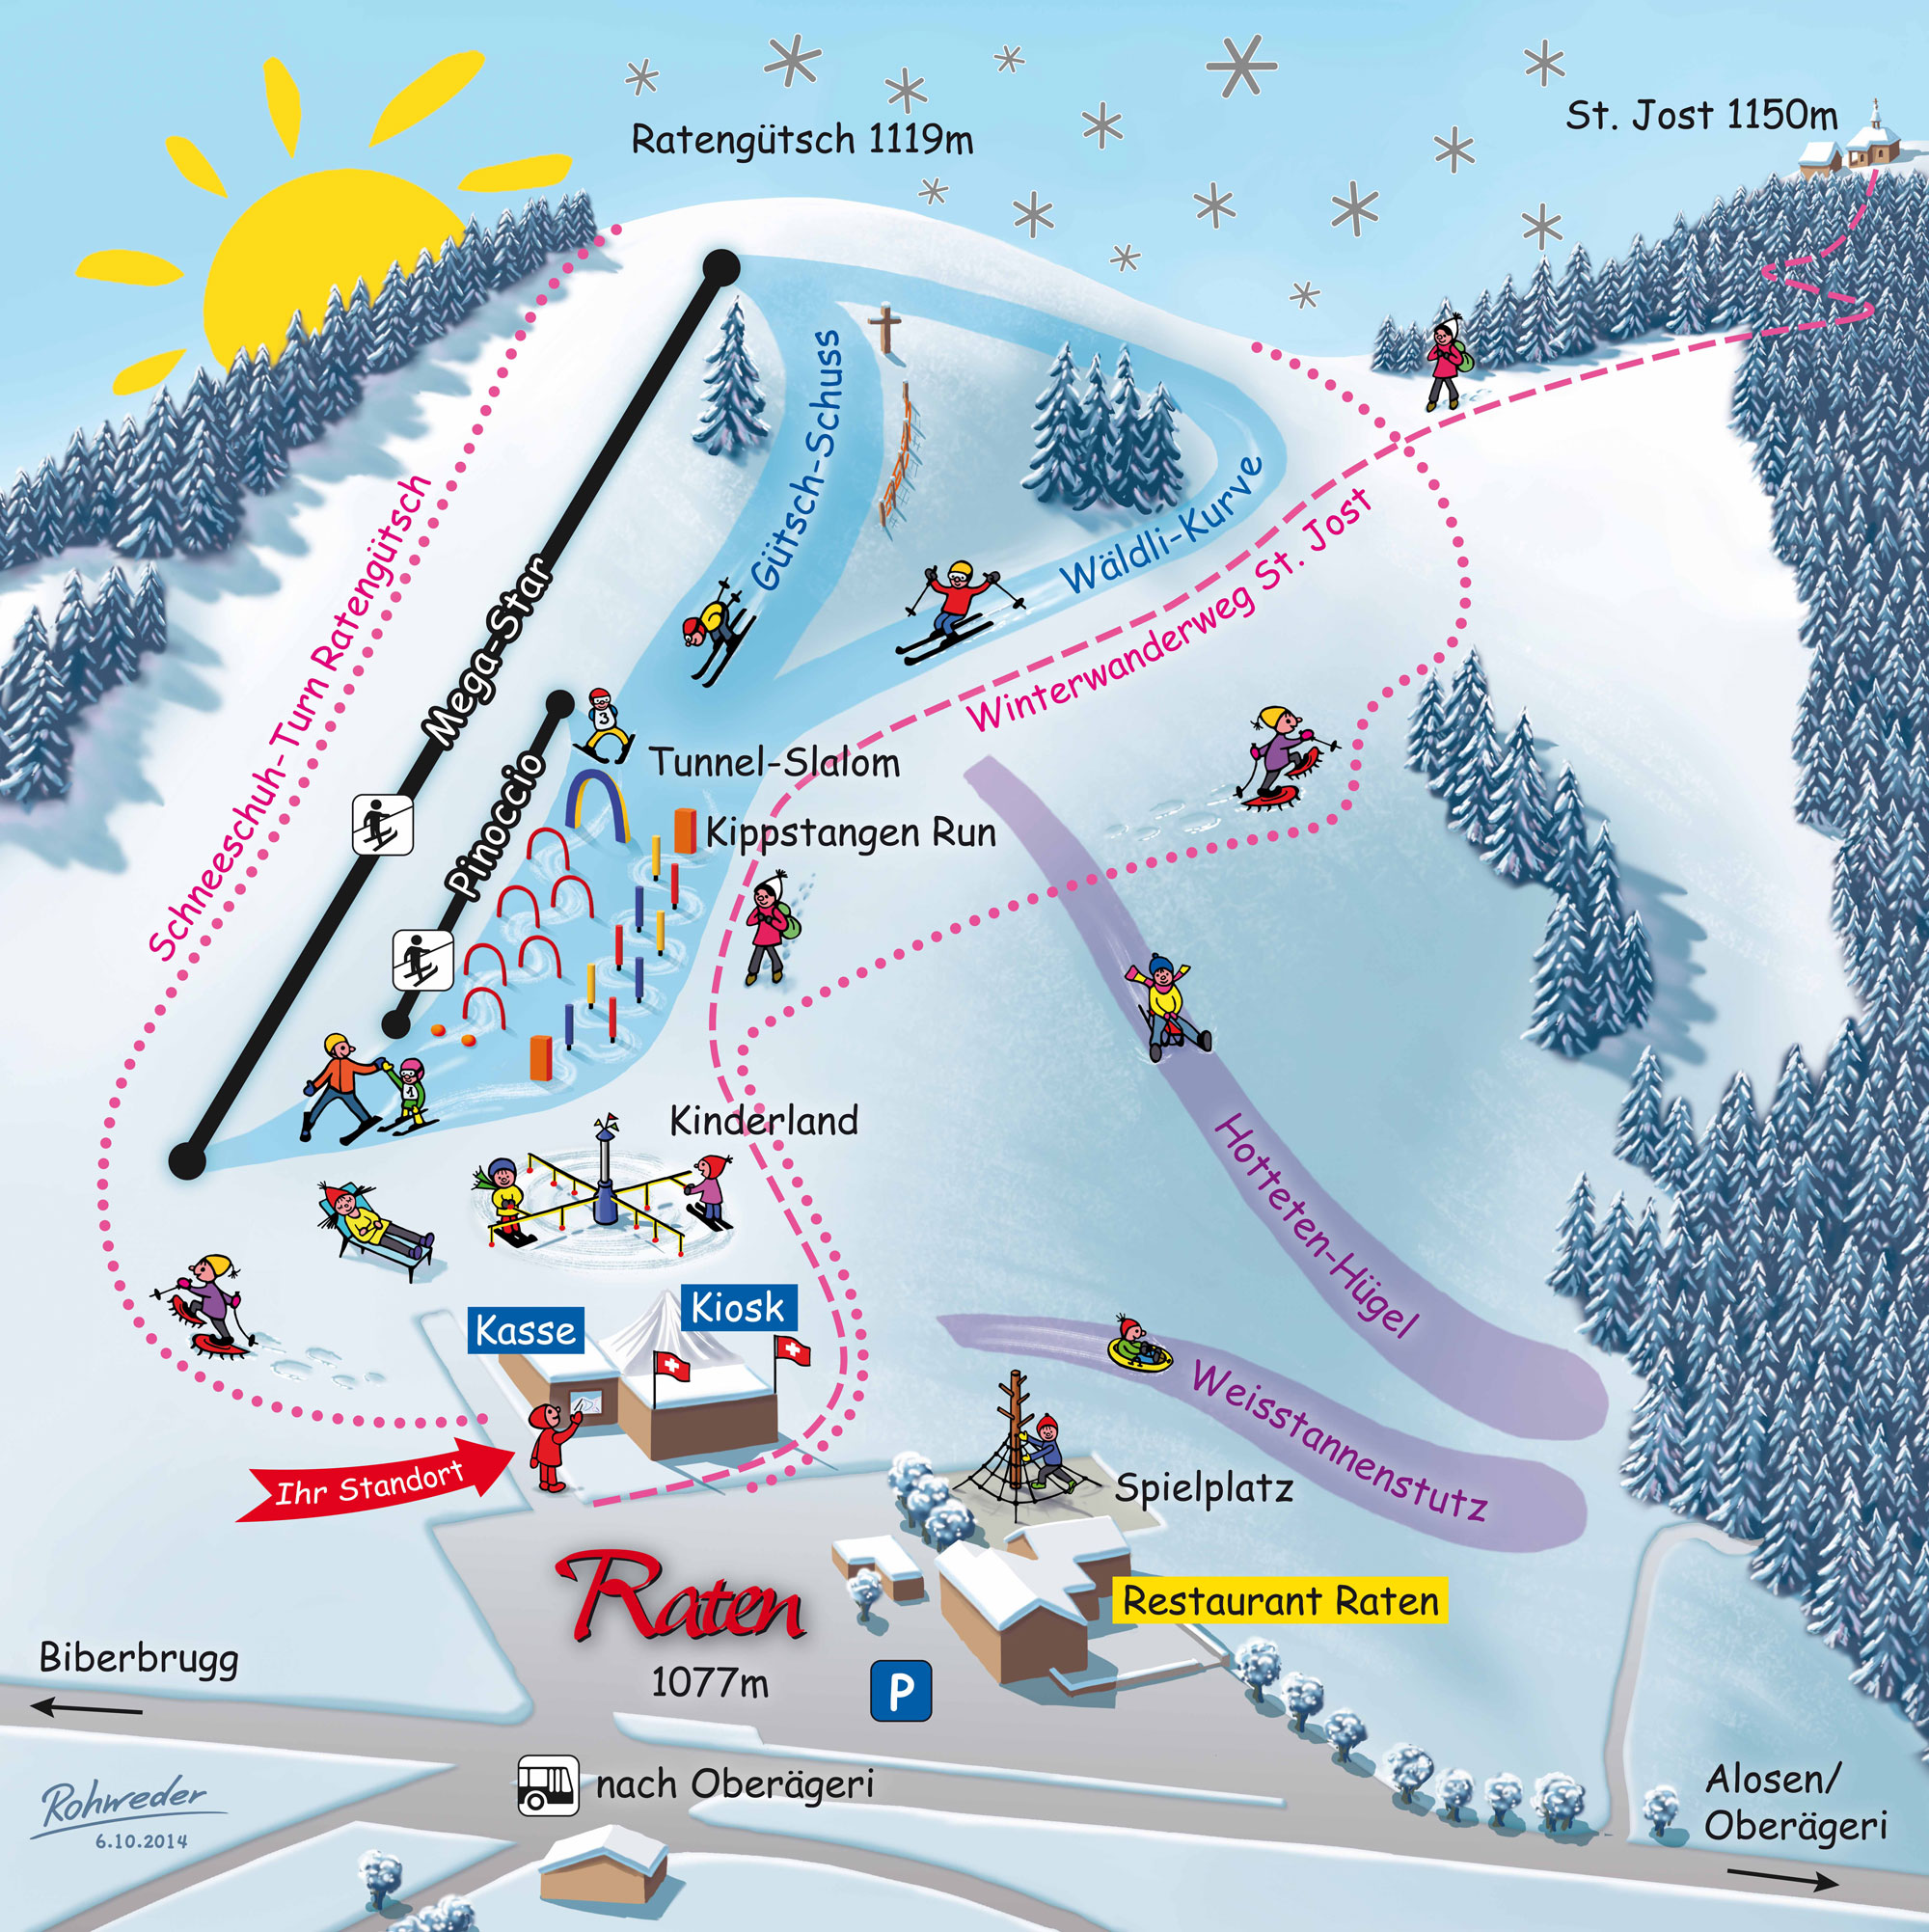 Raten - children's ski school